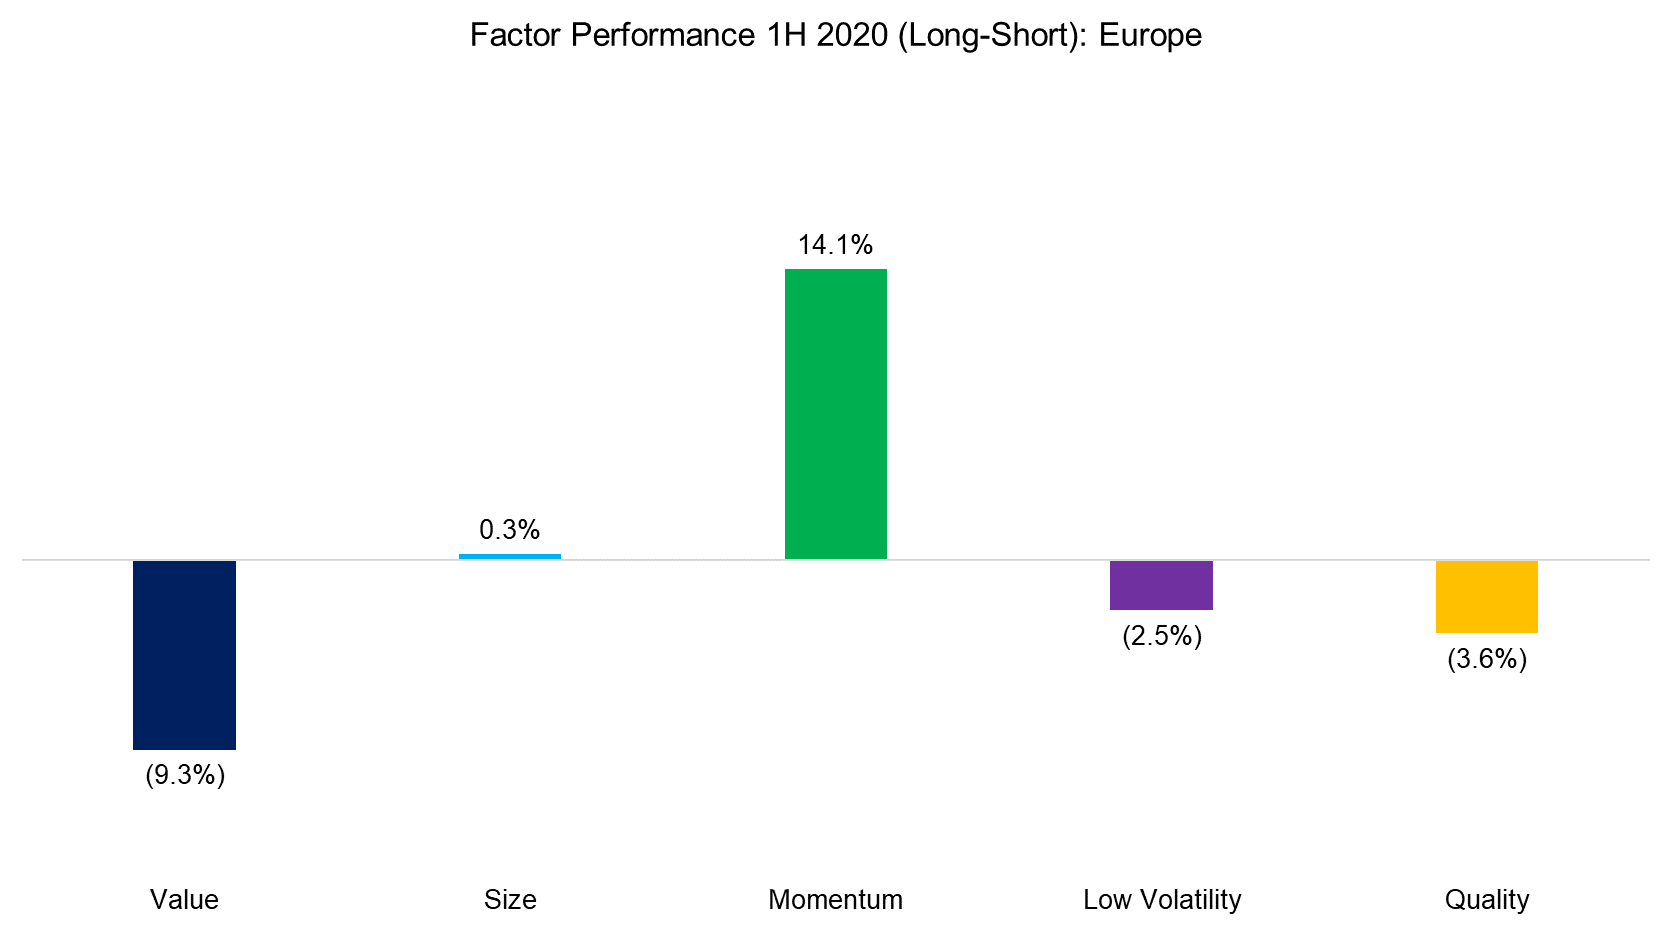 Factor Performance 1H 2020 (Long-Short) Europe